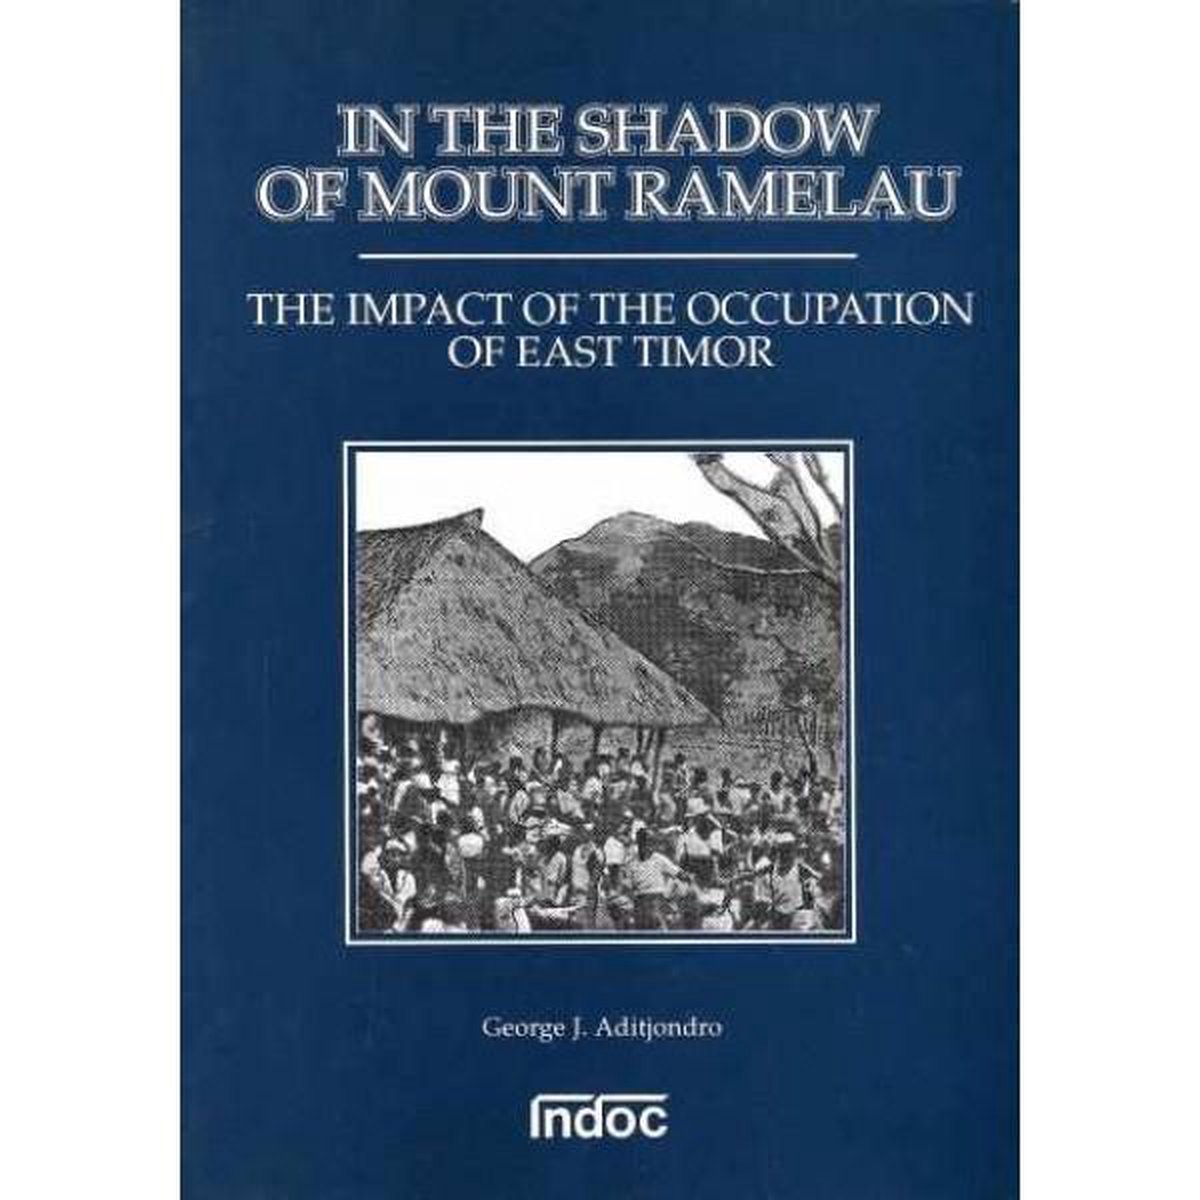 In the shadow of Mount Ramelau